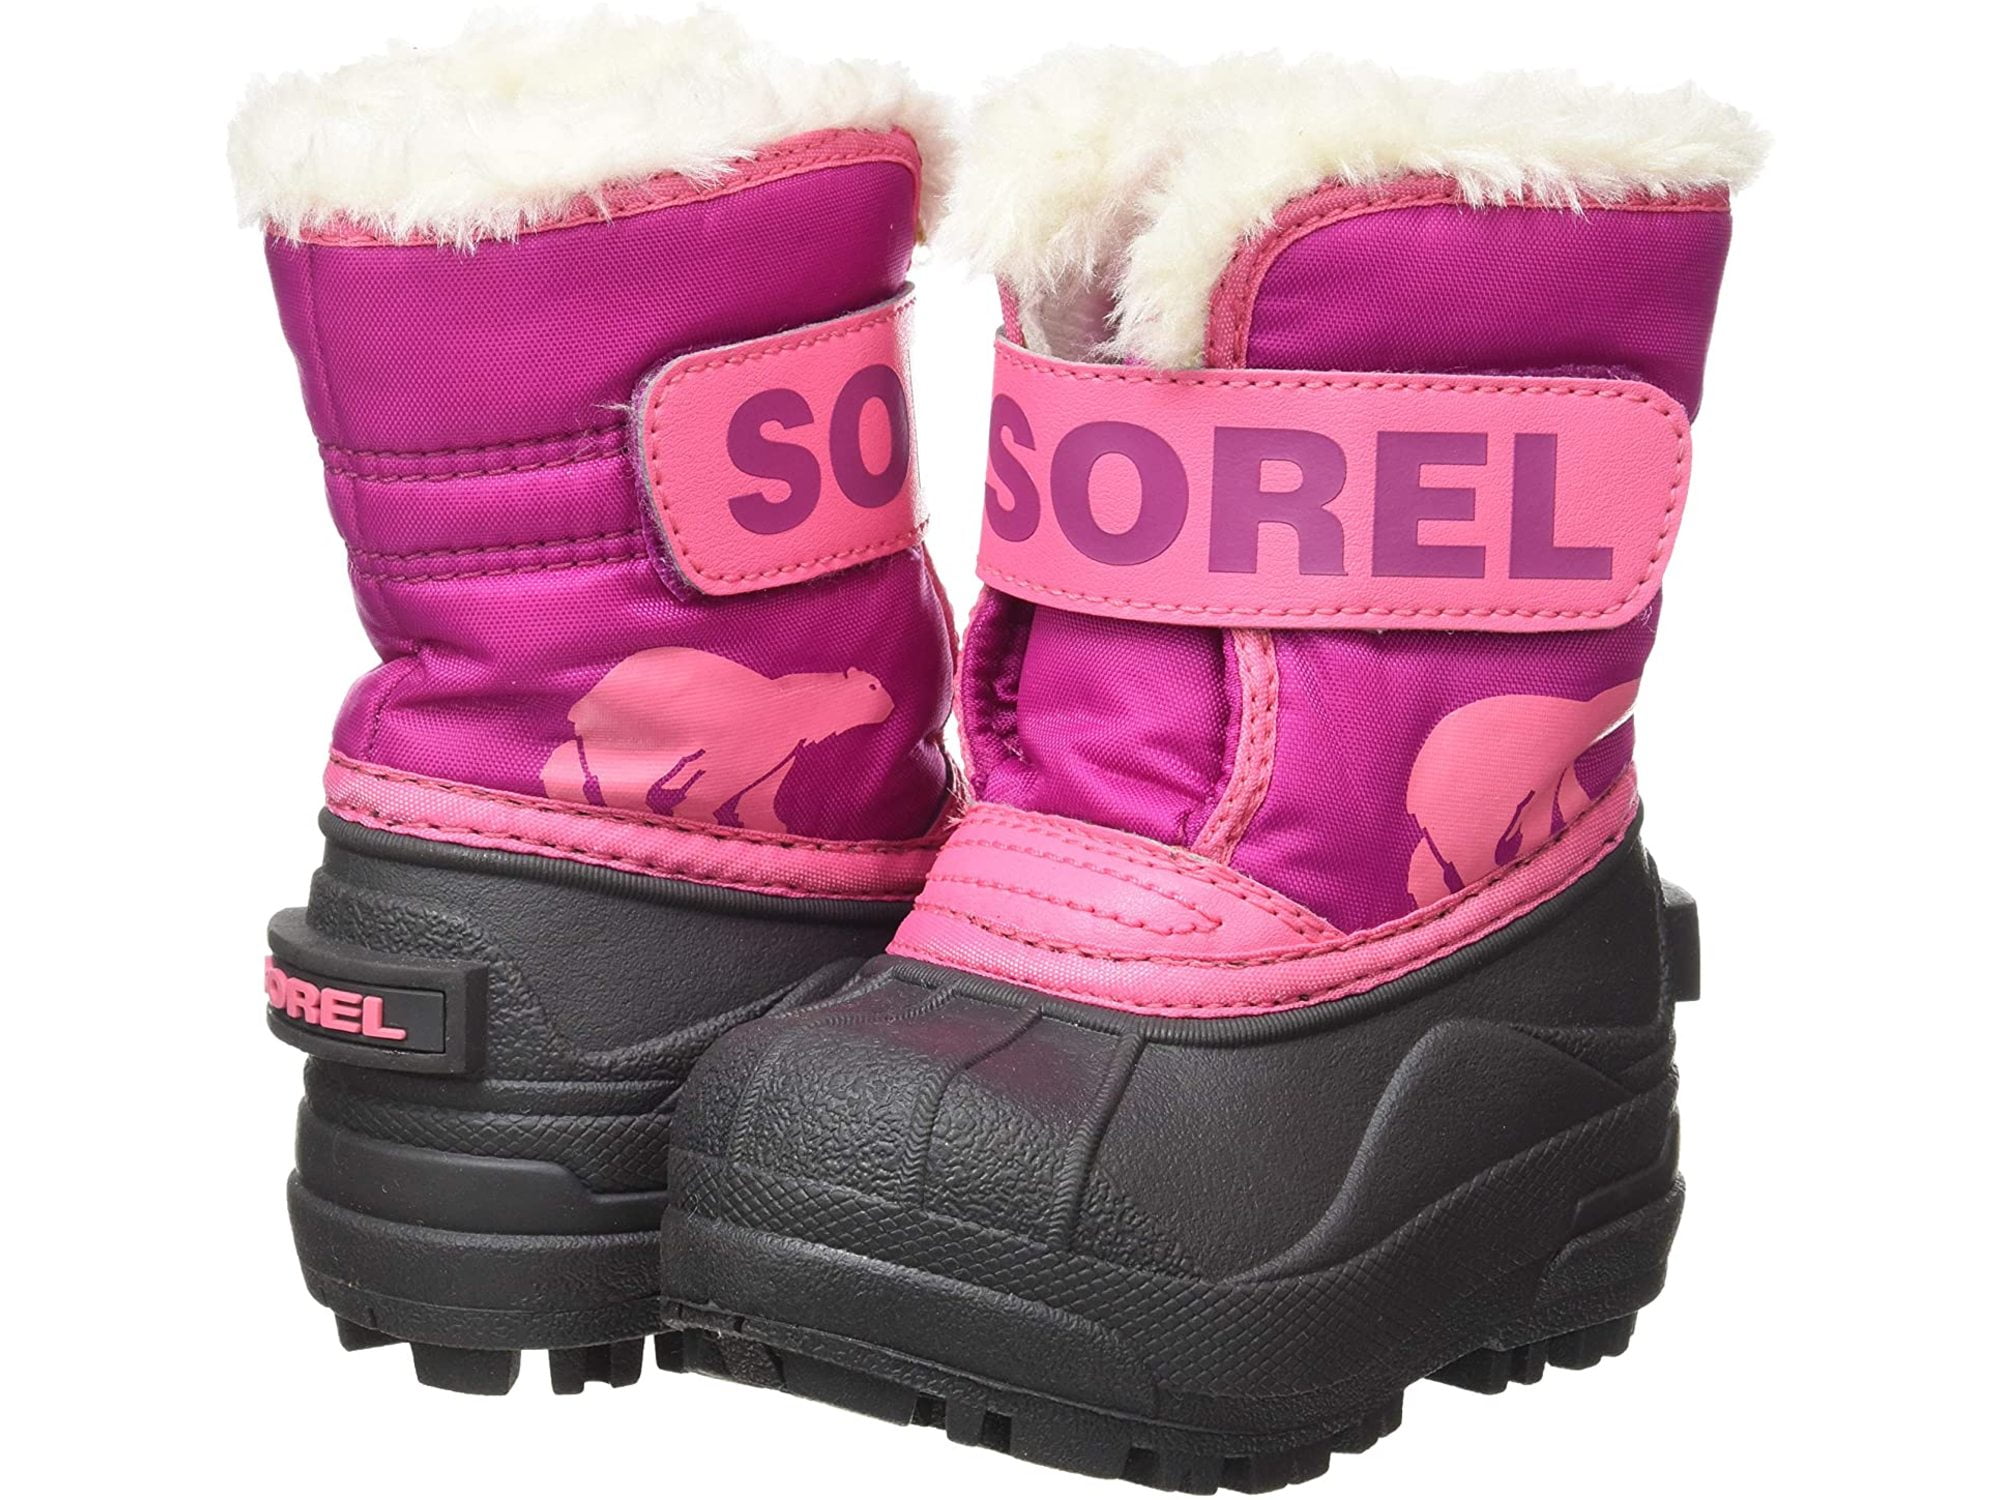 sorel waterproof boots kids